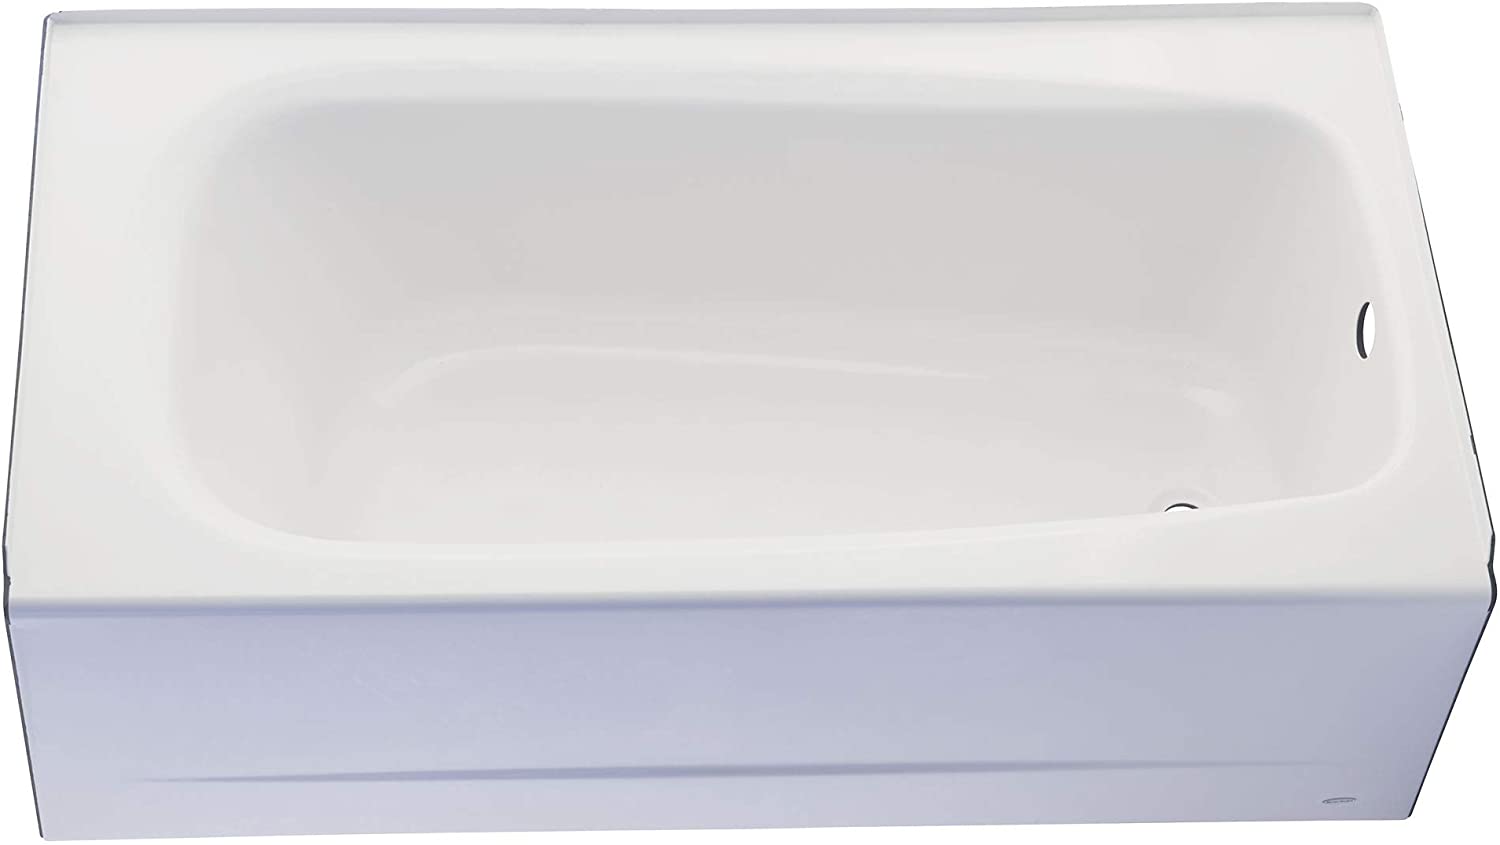 American Standard 2460002.020 Cambridge Easy Clean Alcove Bathtub, 60-Inch